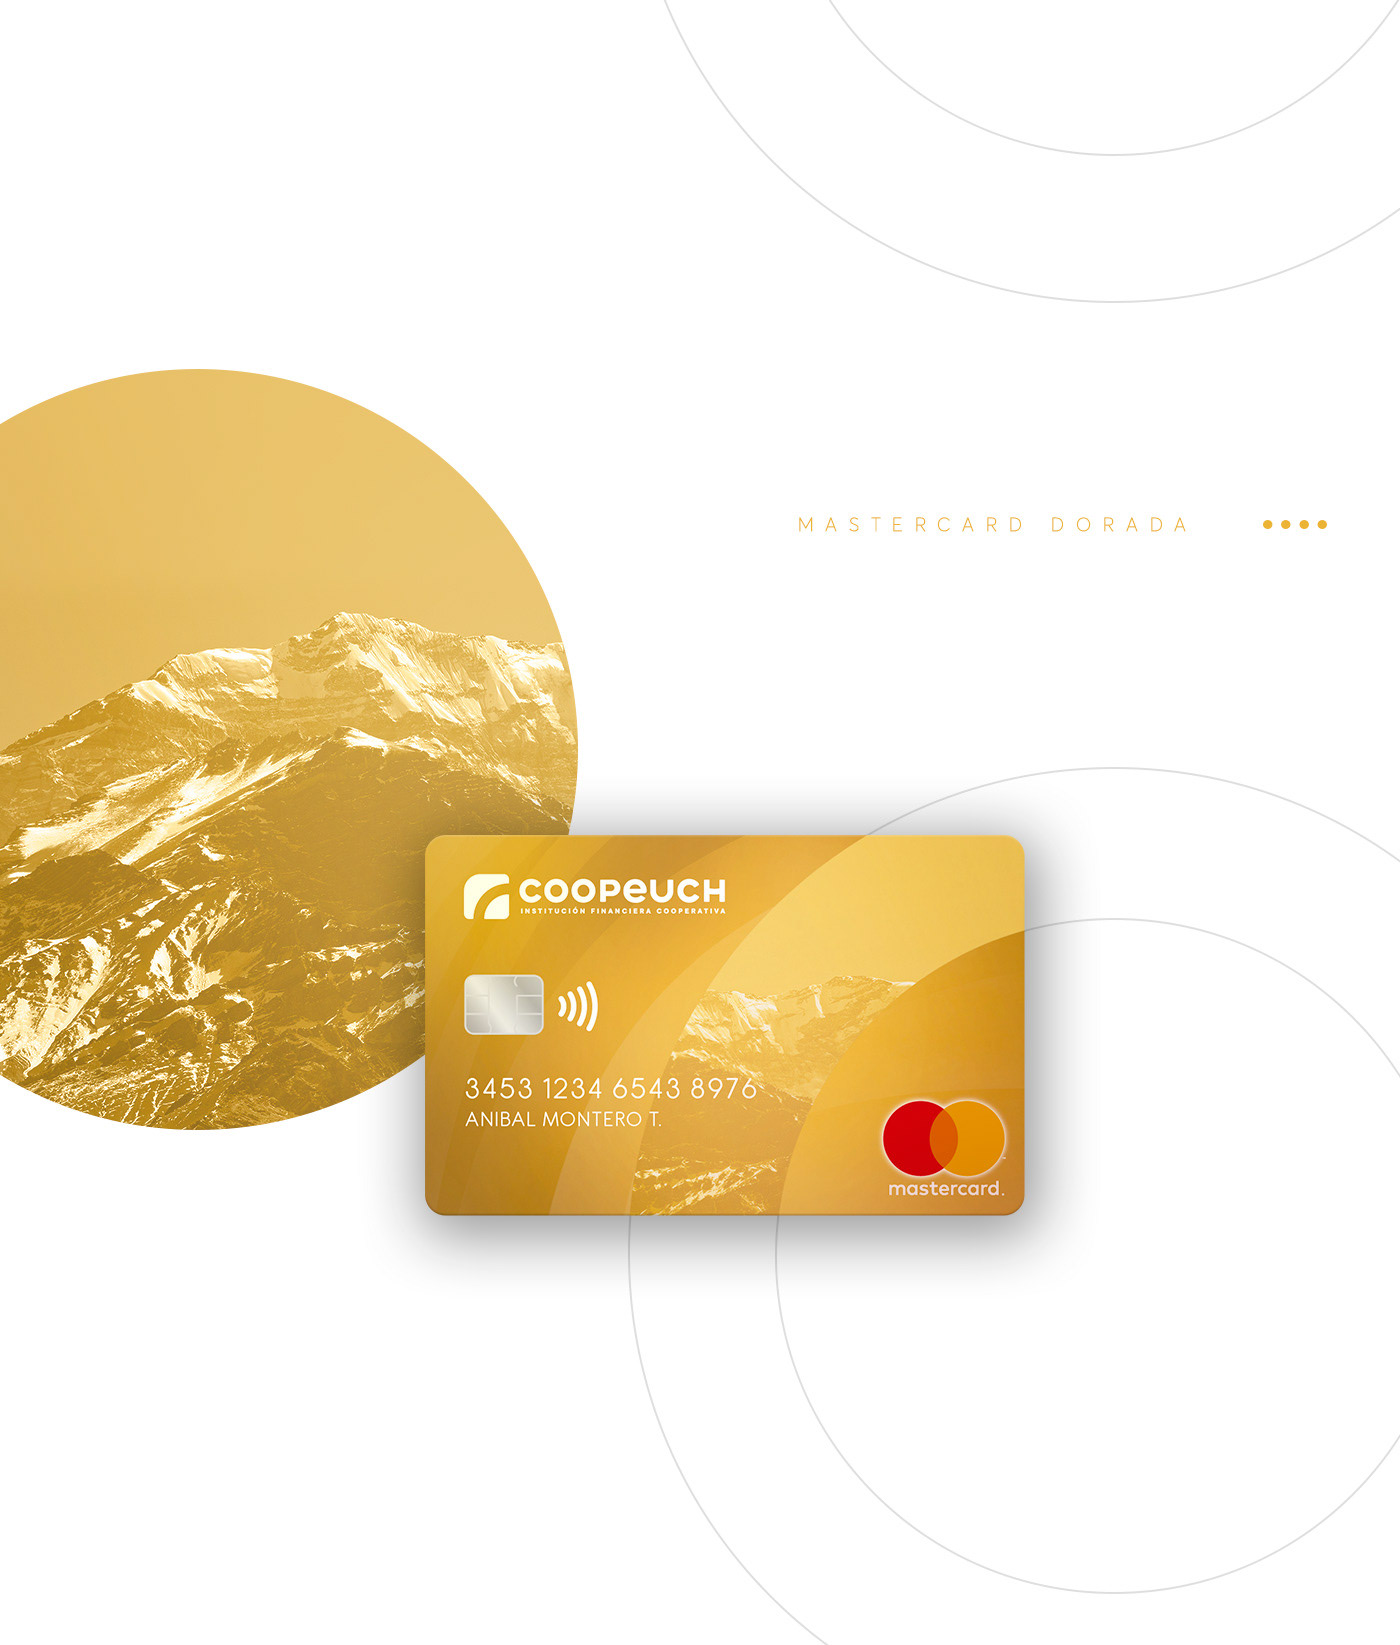 credit card tarjeta de crédito mastercard copeuch gold